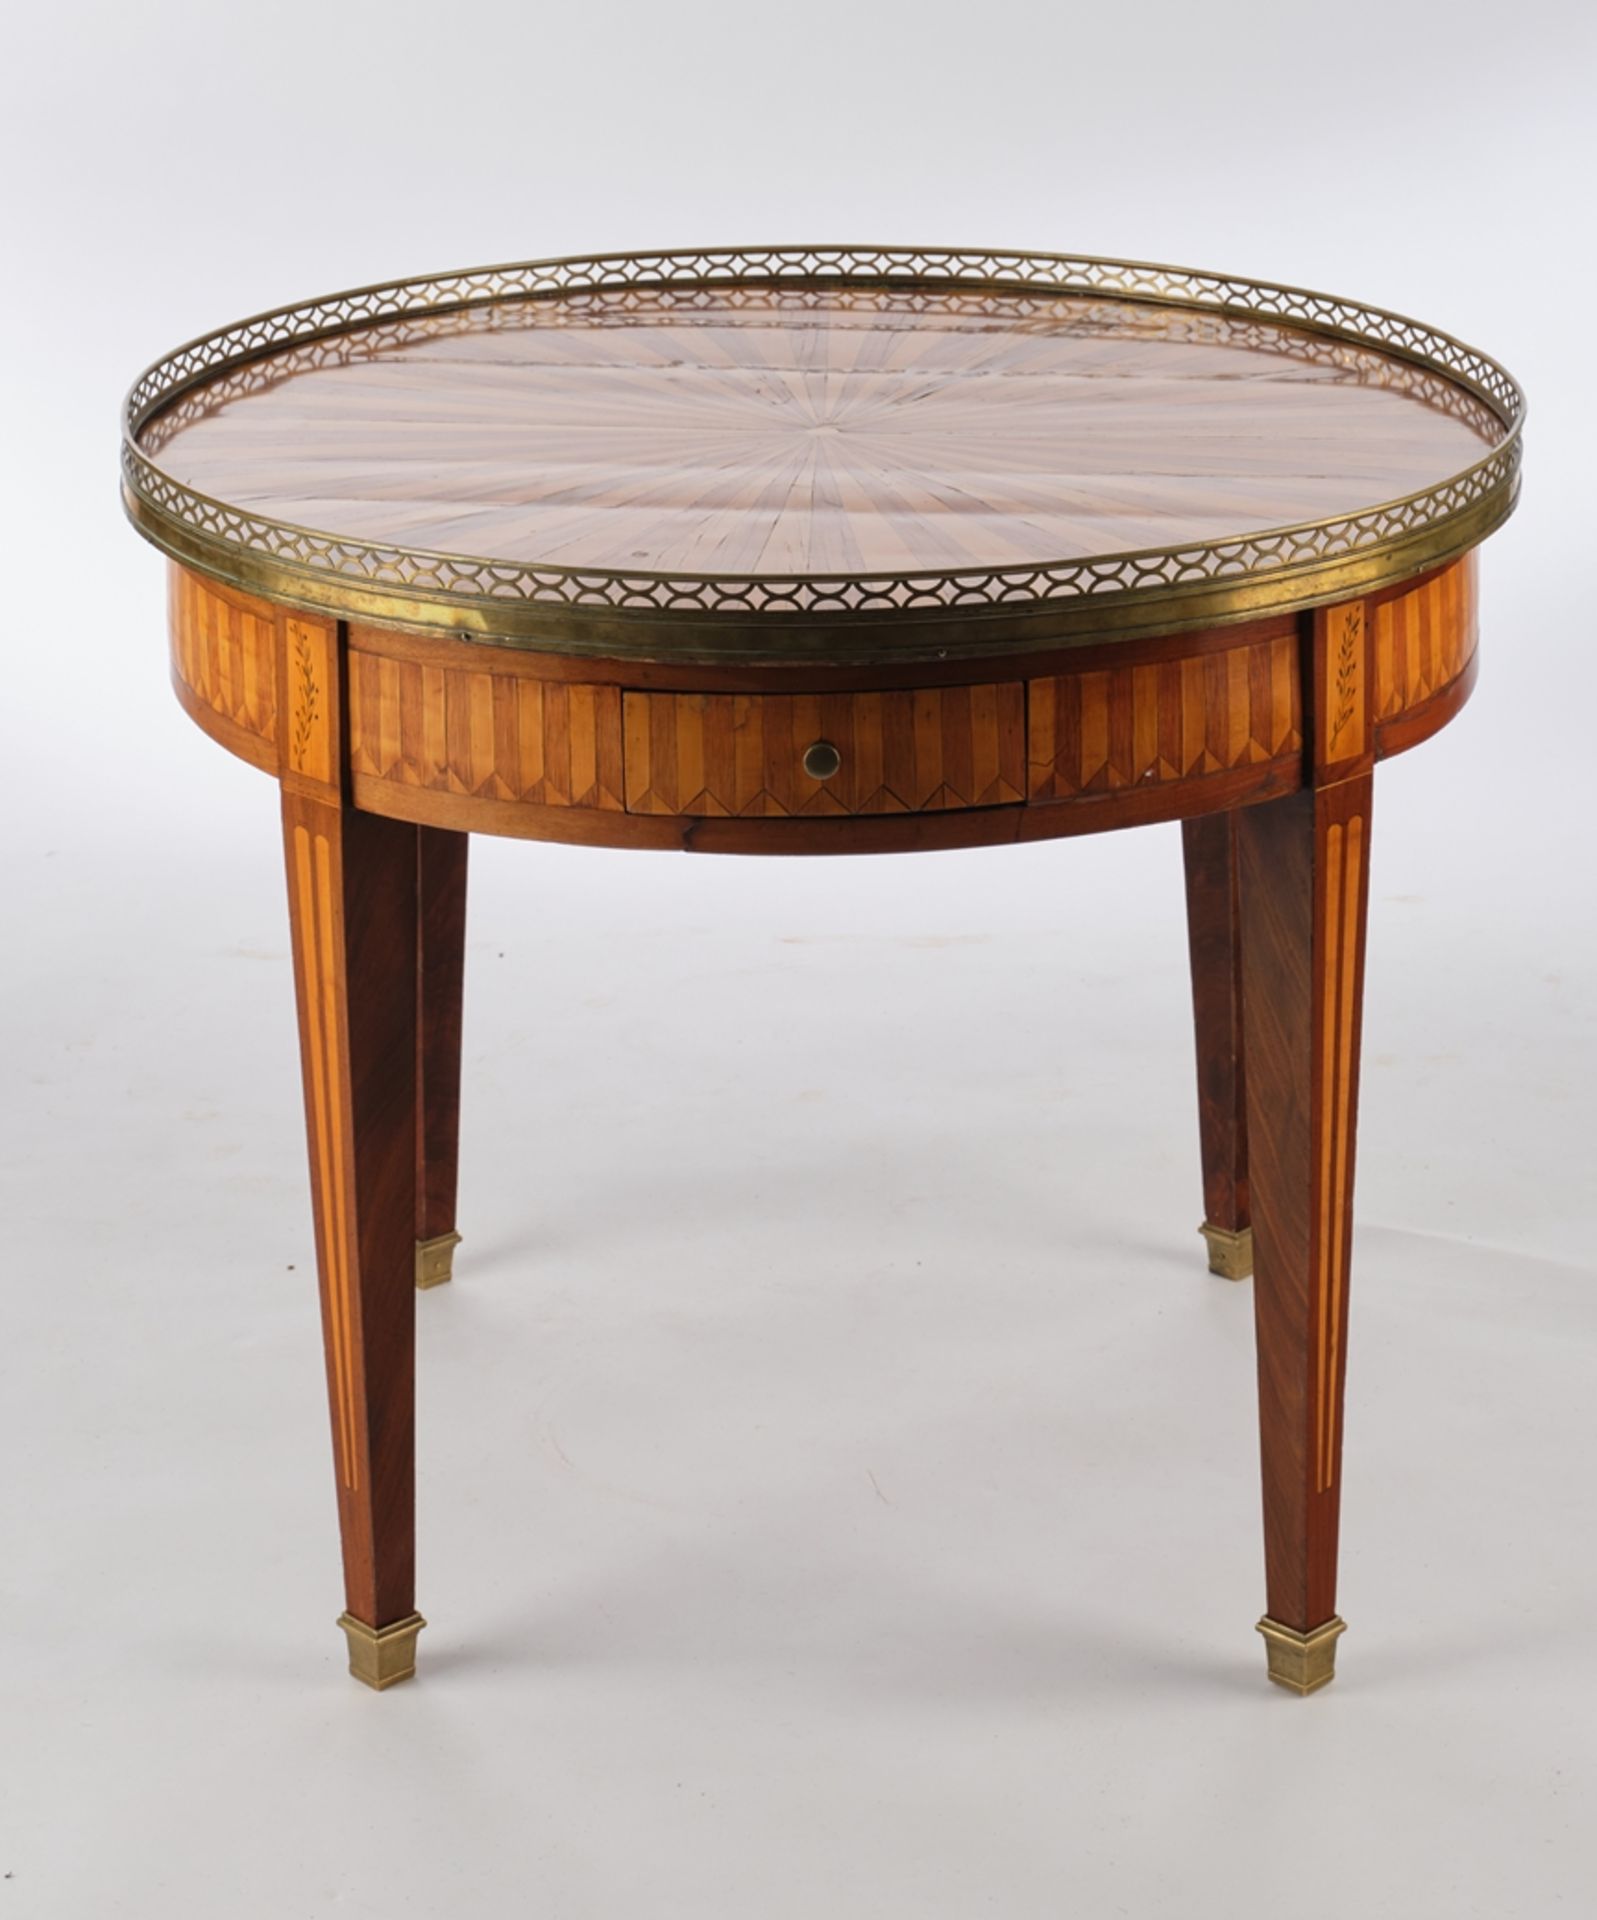 Fine salon table, Louis XVI, France, c. 1780, rosewood, satinwood and mahogany veneered on oak, rou